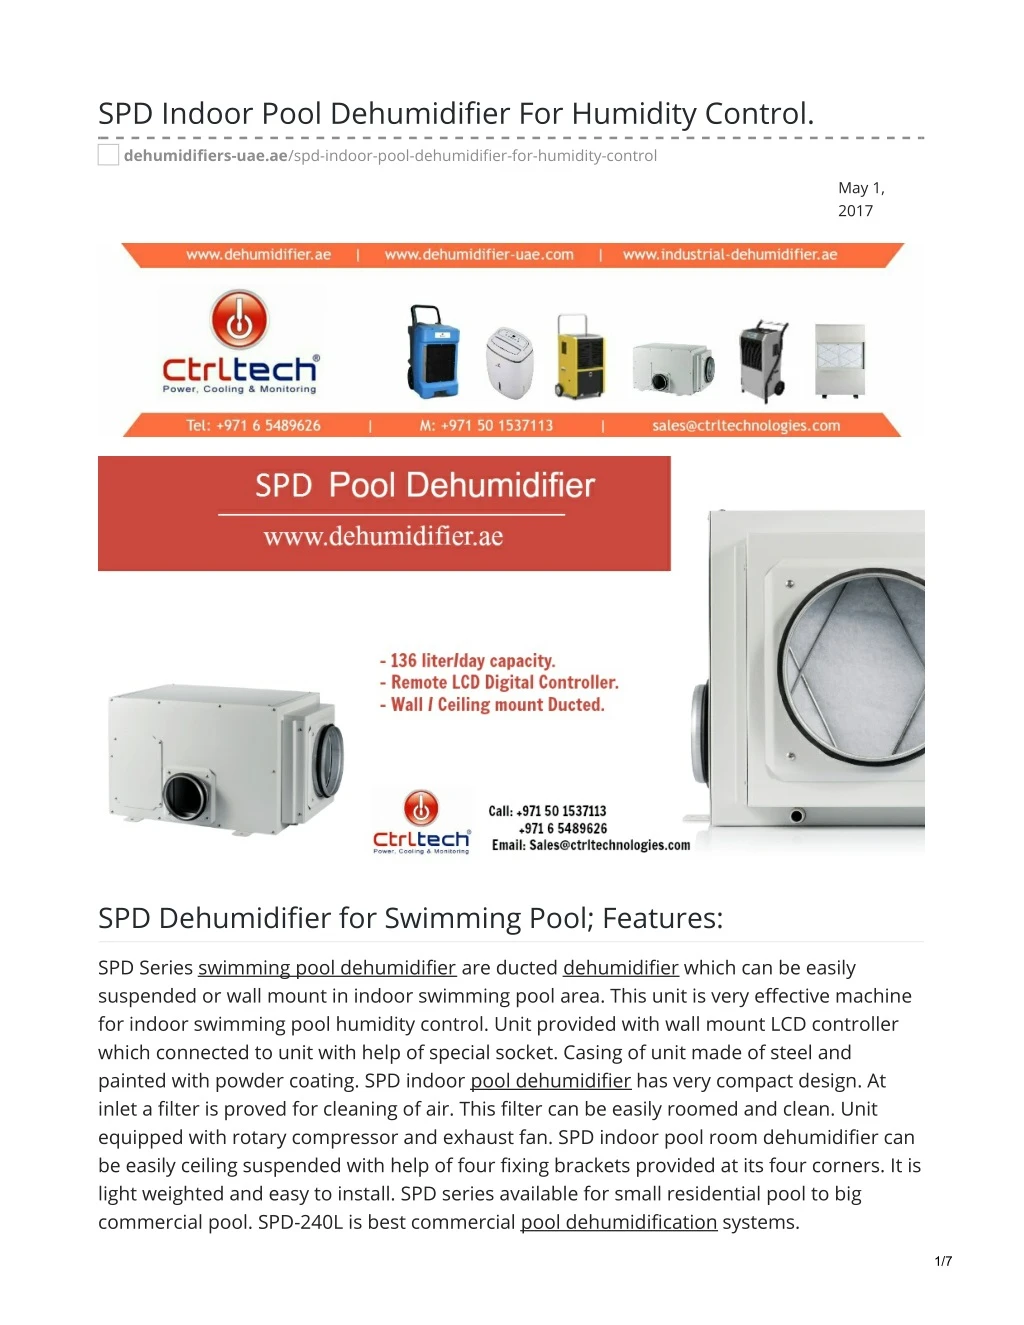 spd indoor pool dehumidifier for humidity control